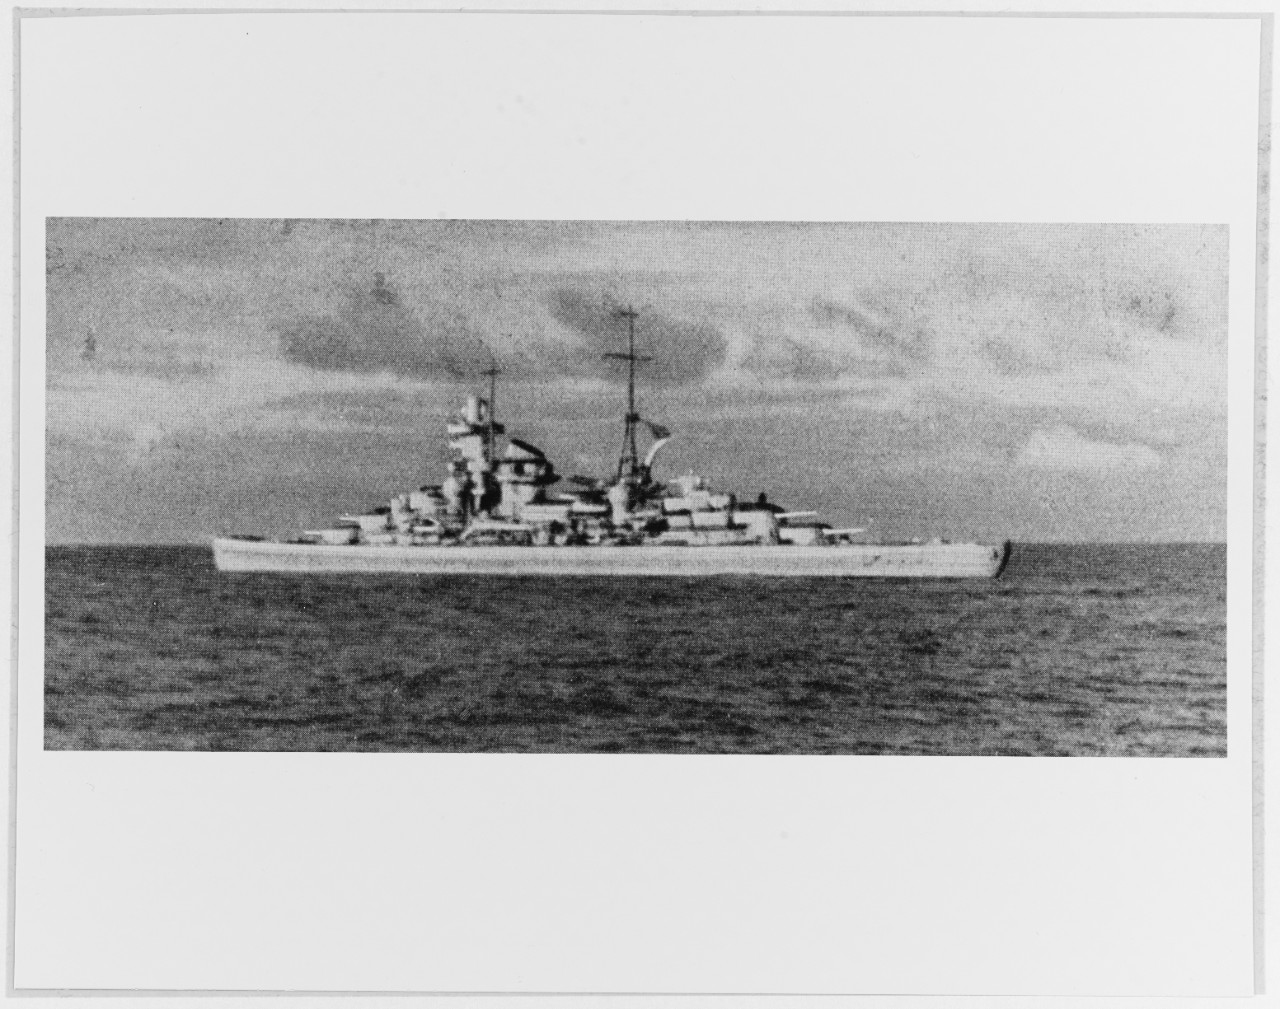 ADMIRAL HIPPER (German heavy cruiser, 1937)